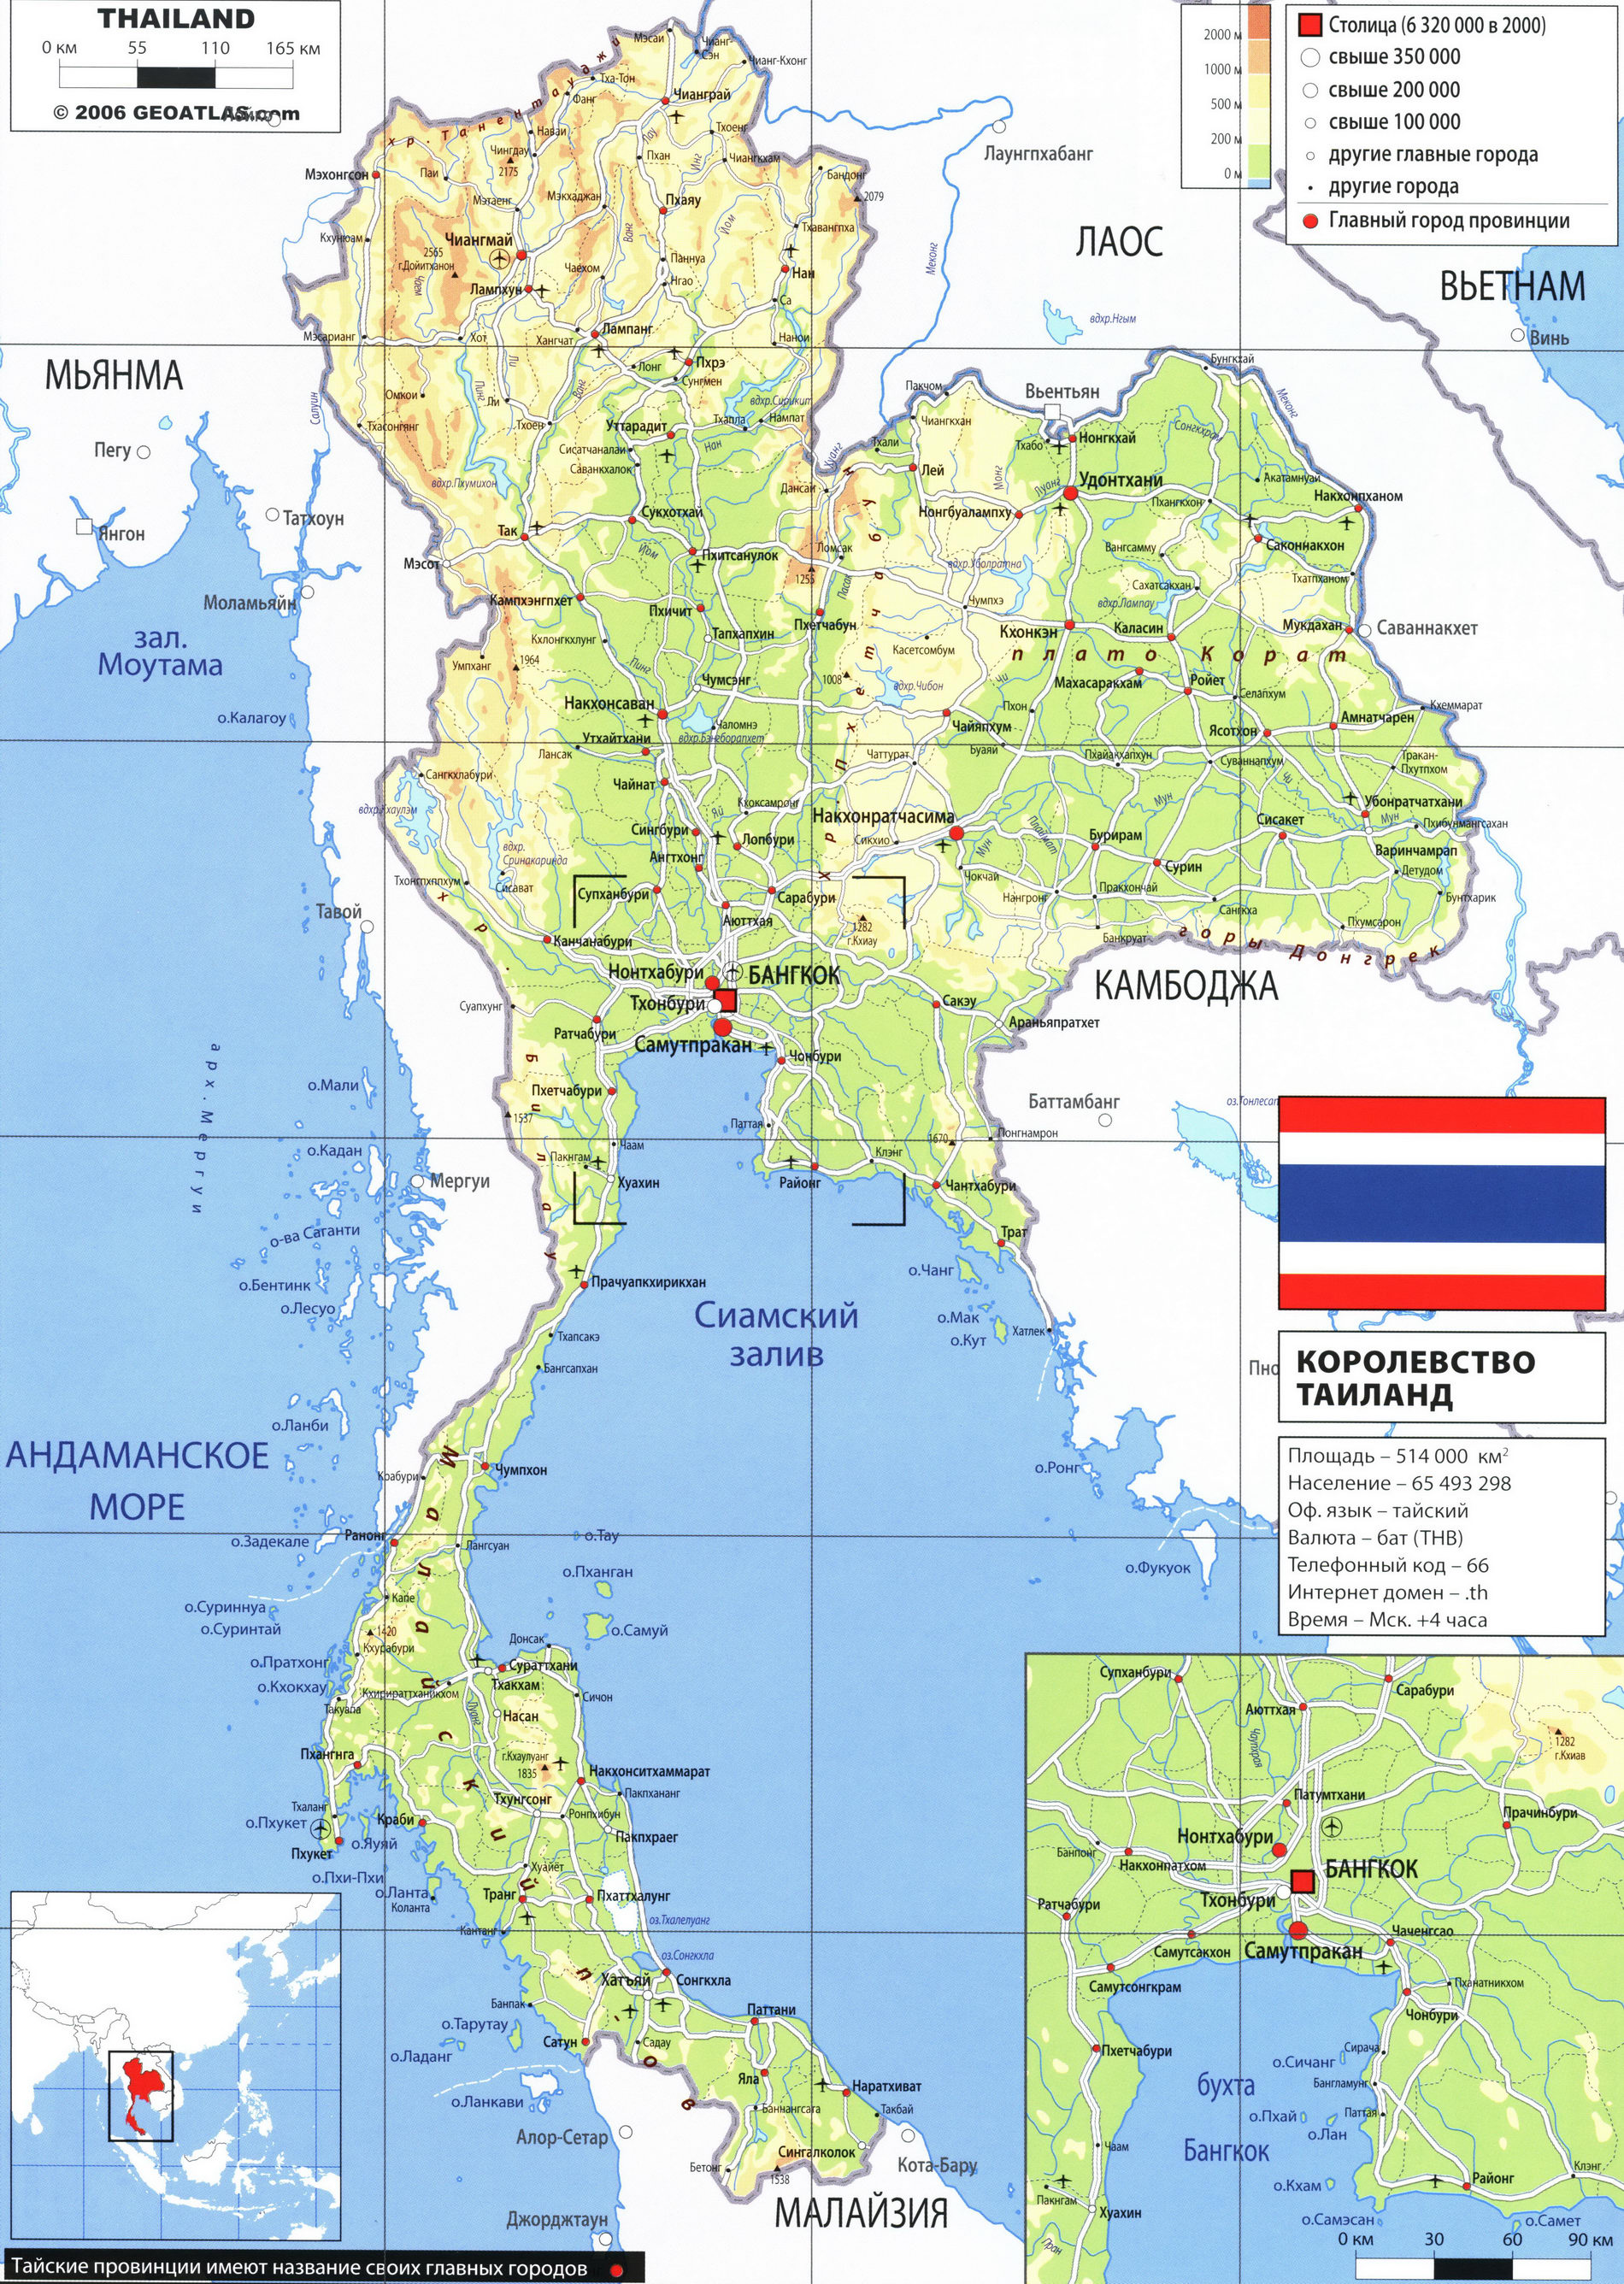 Таиланд карта на русском языке